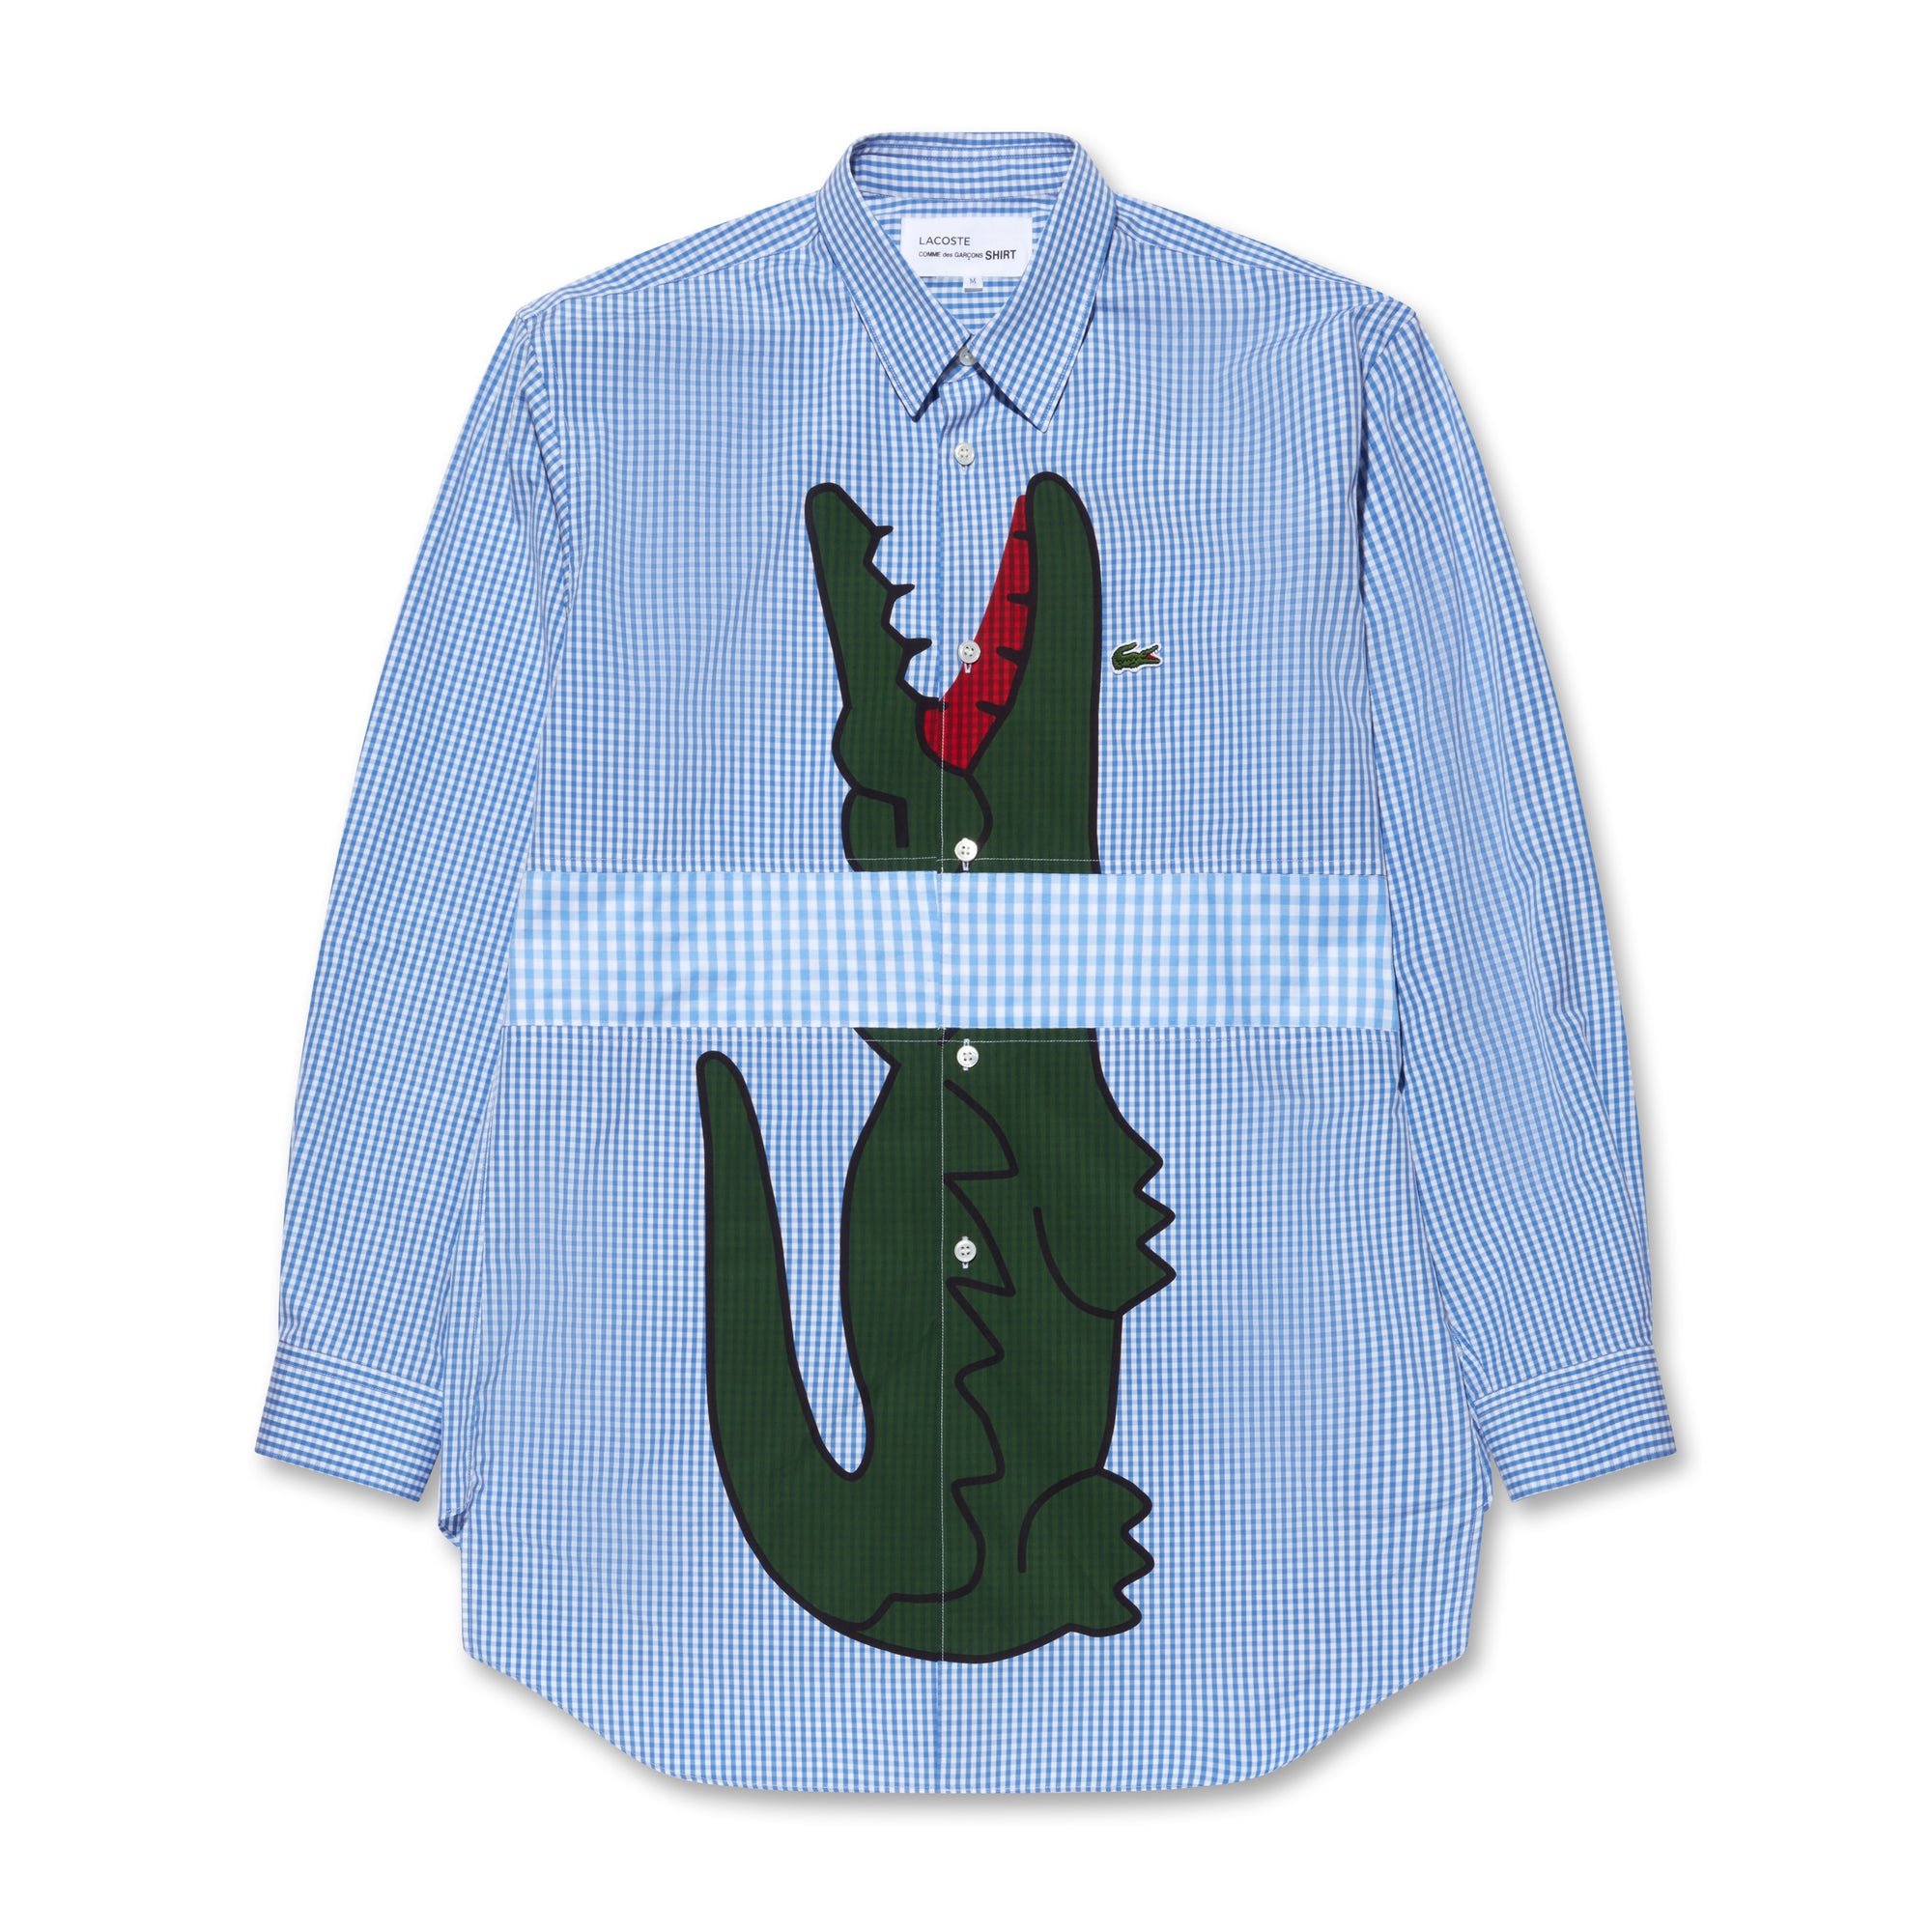 CDG Shirt - Lacoste Men's Cotton Check Shirt - (A-2 Print) view 5